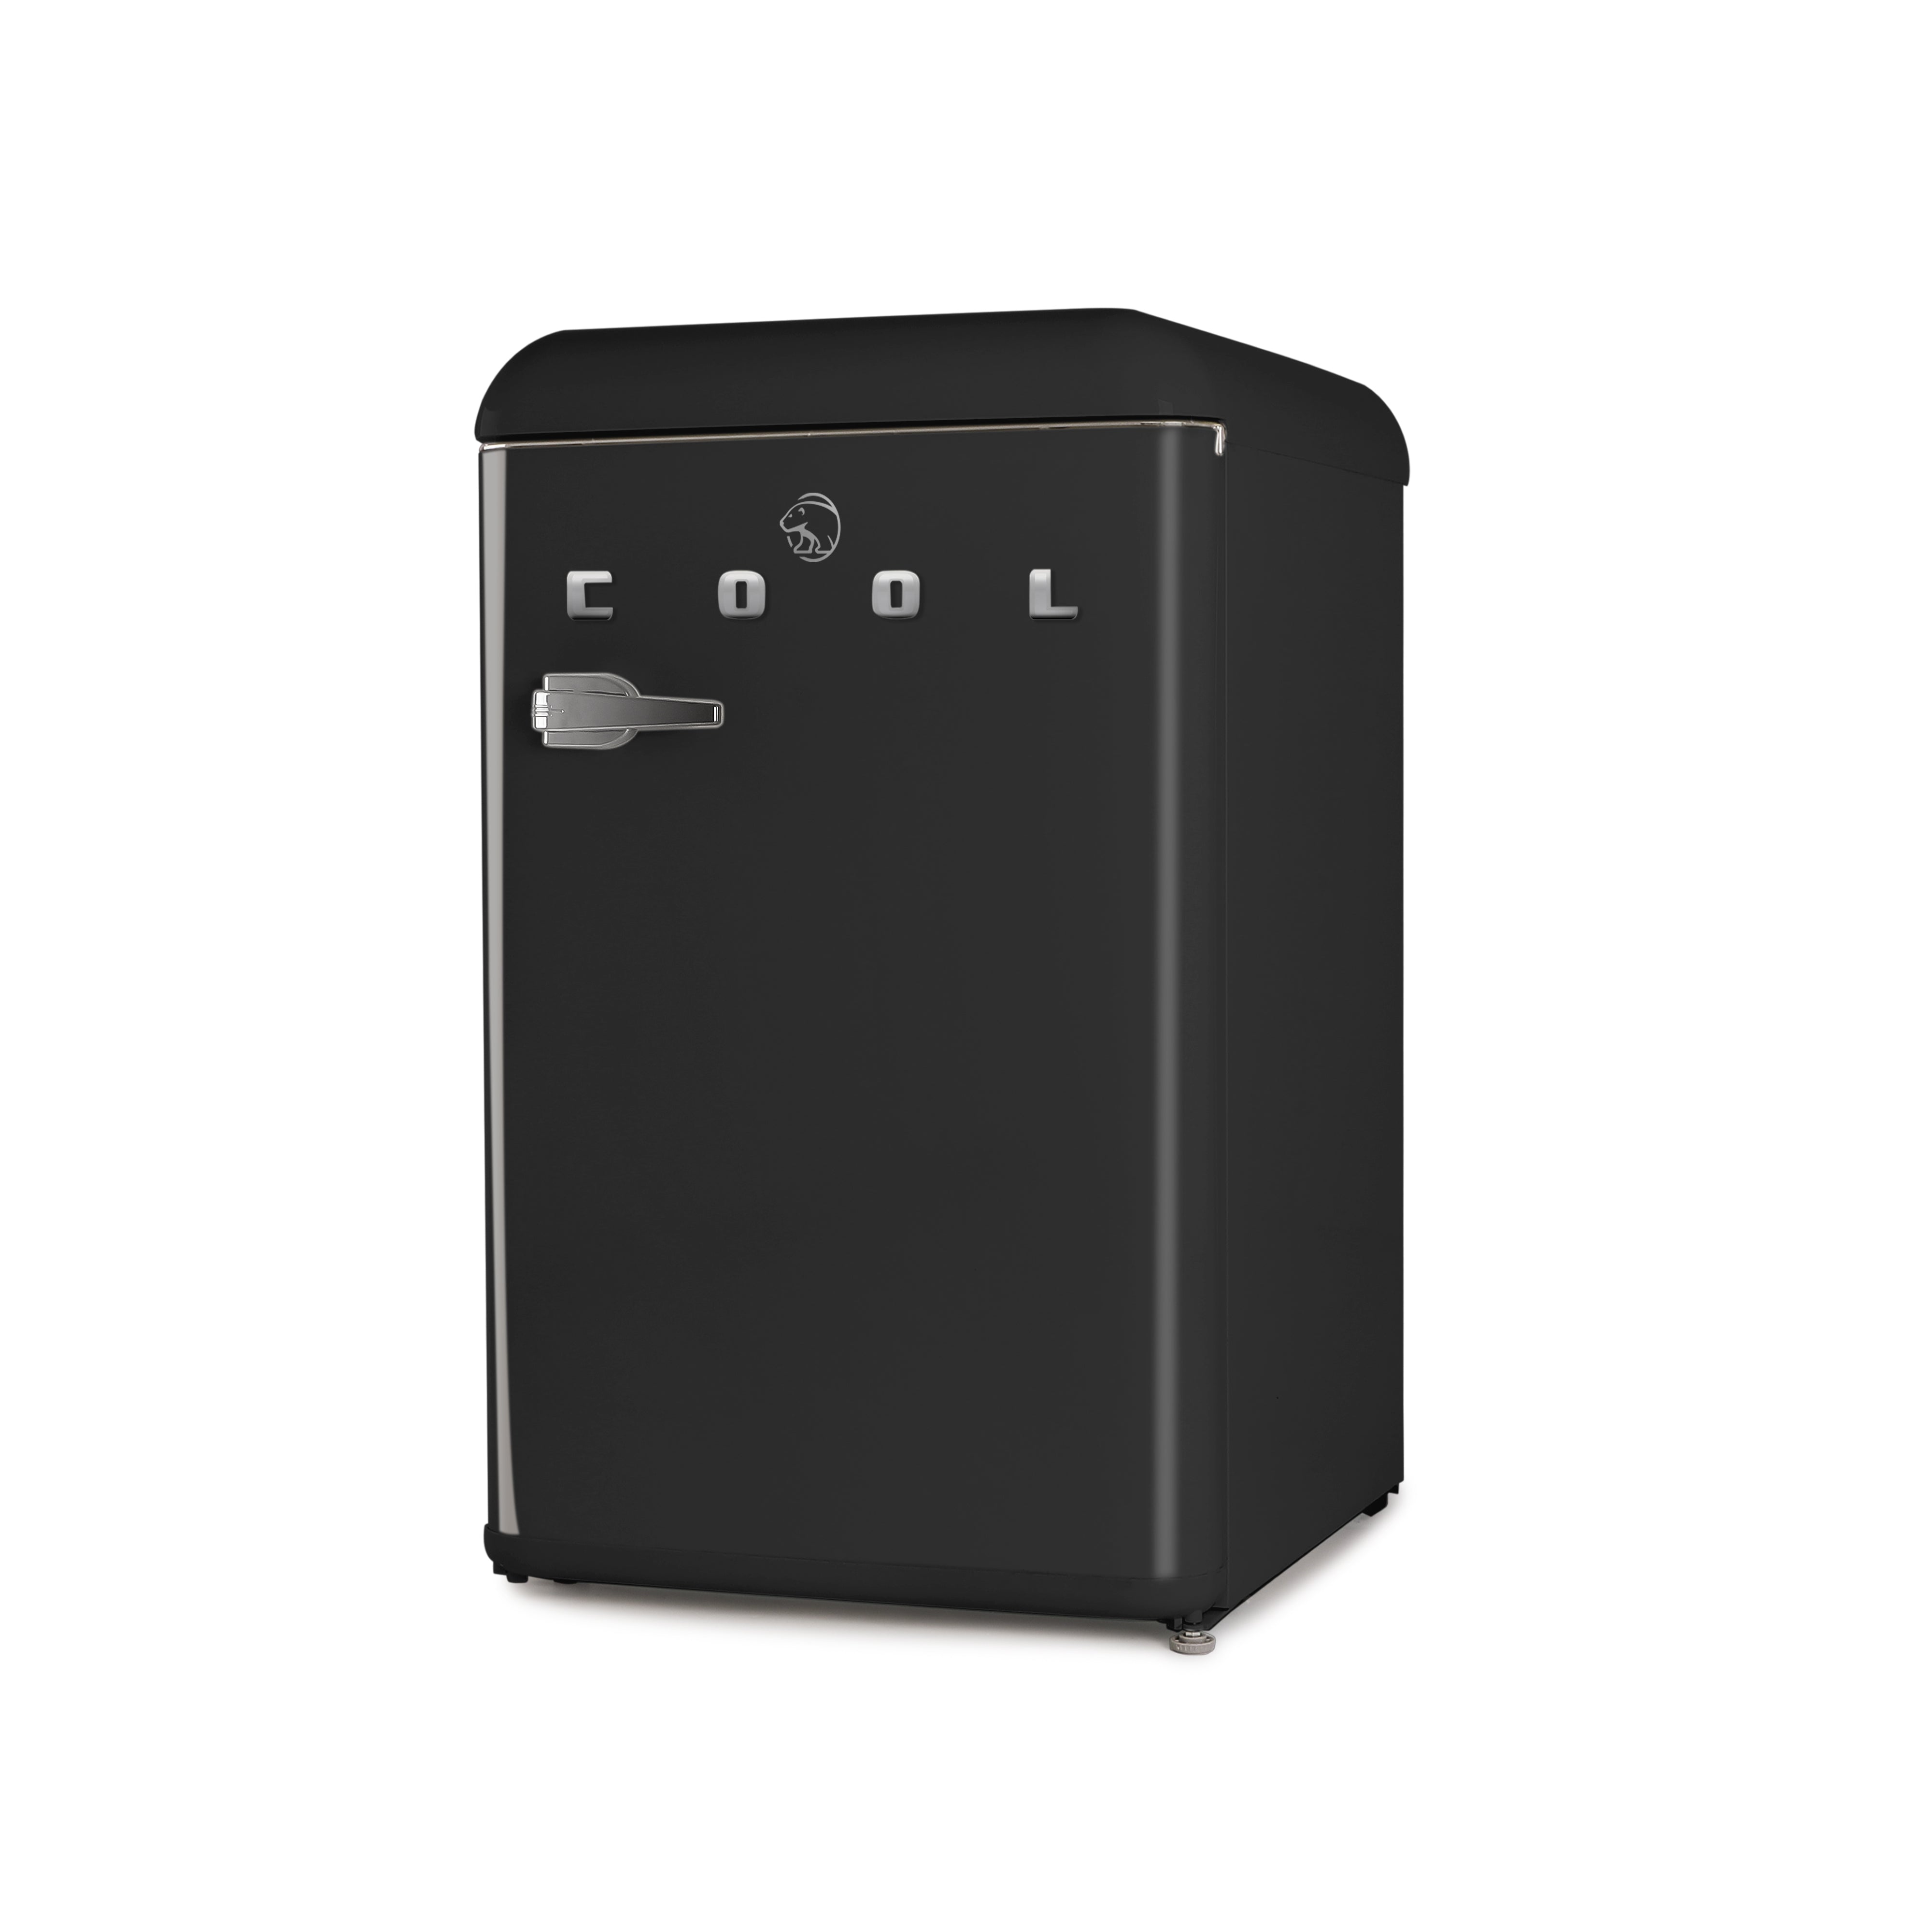 COMMERCIAL COOL Retro All-Refrigerator 4.4 Cu. Ft., Black